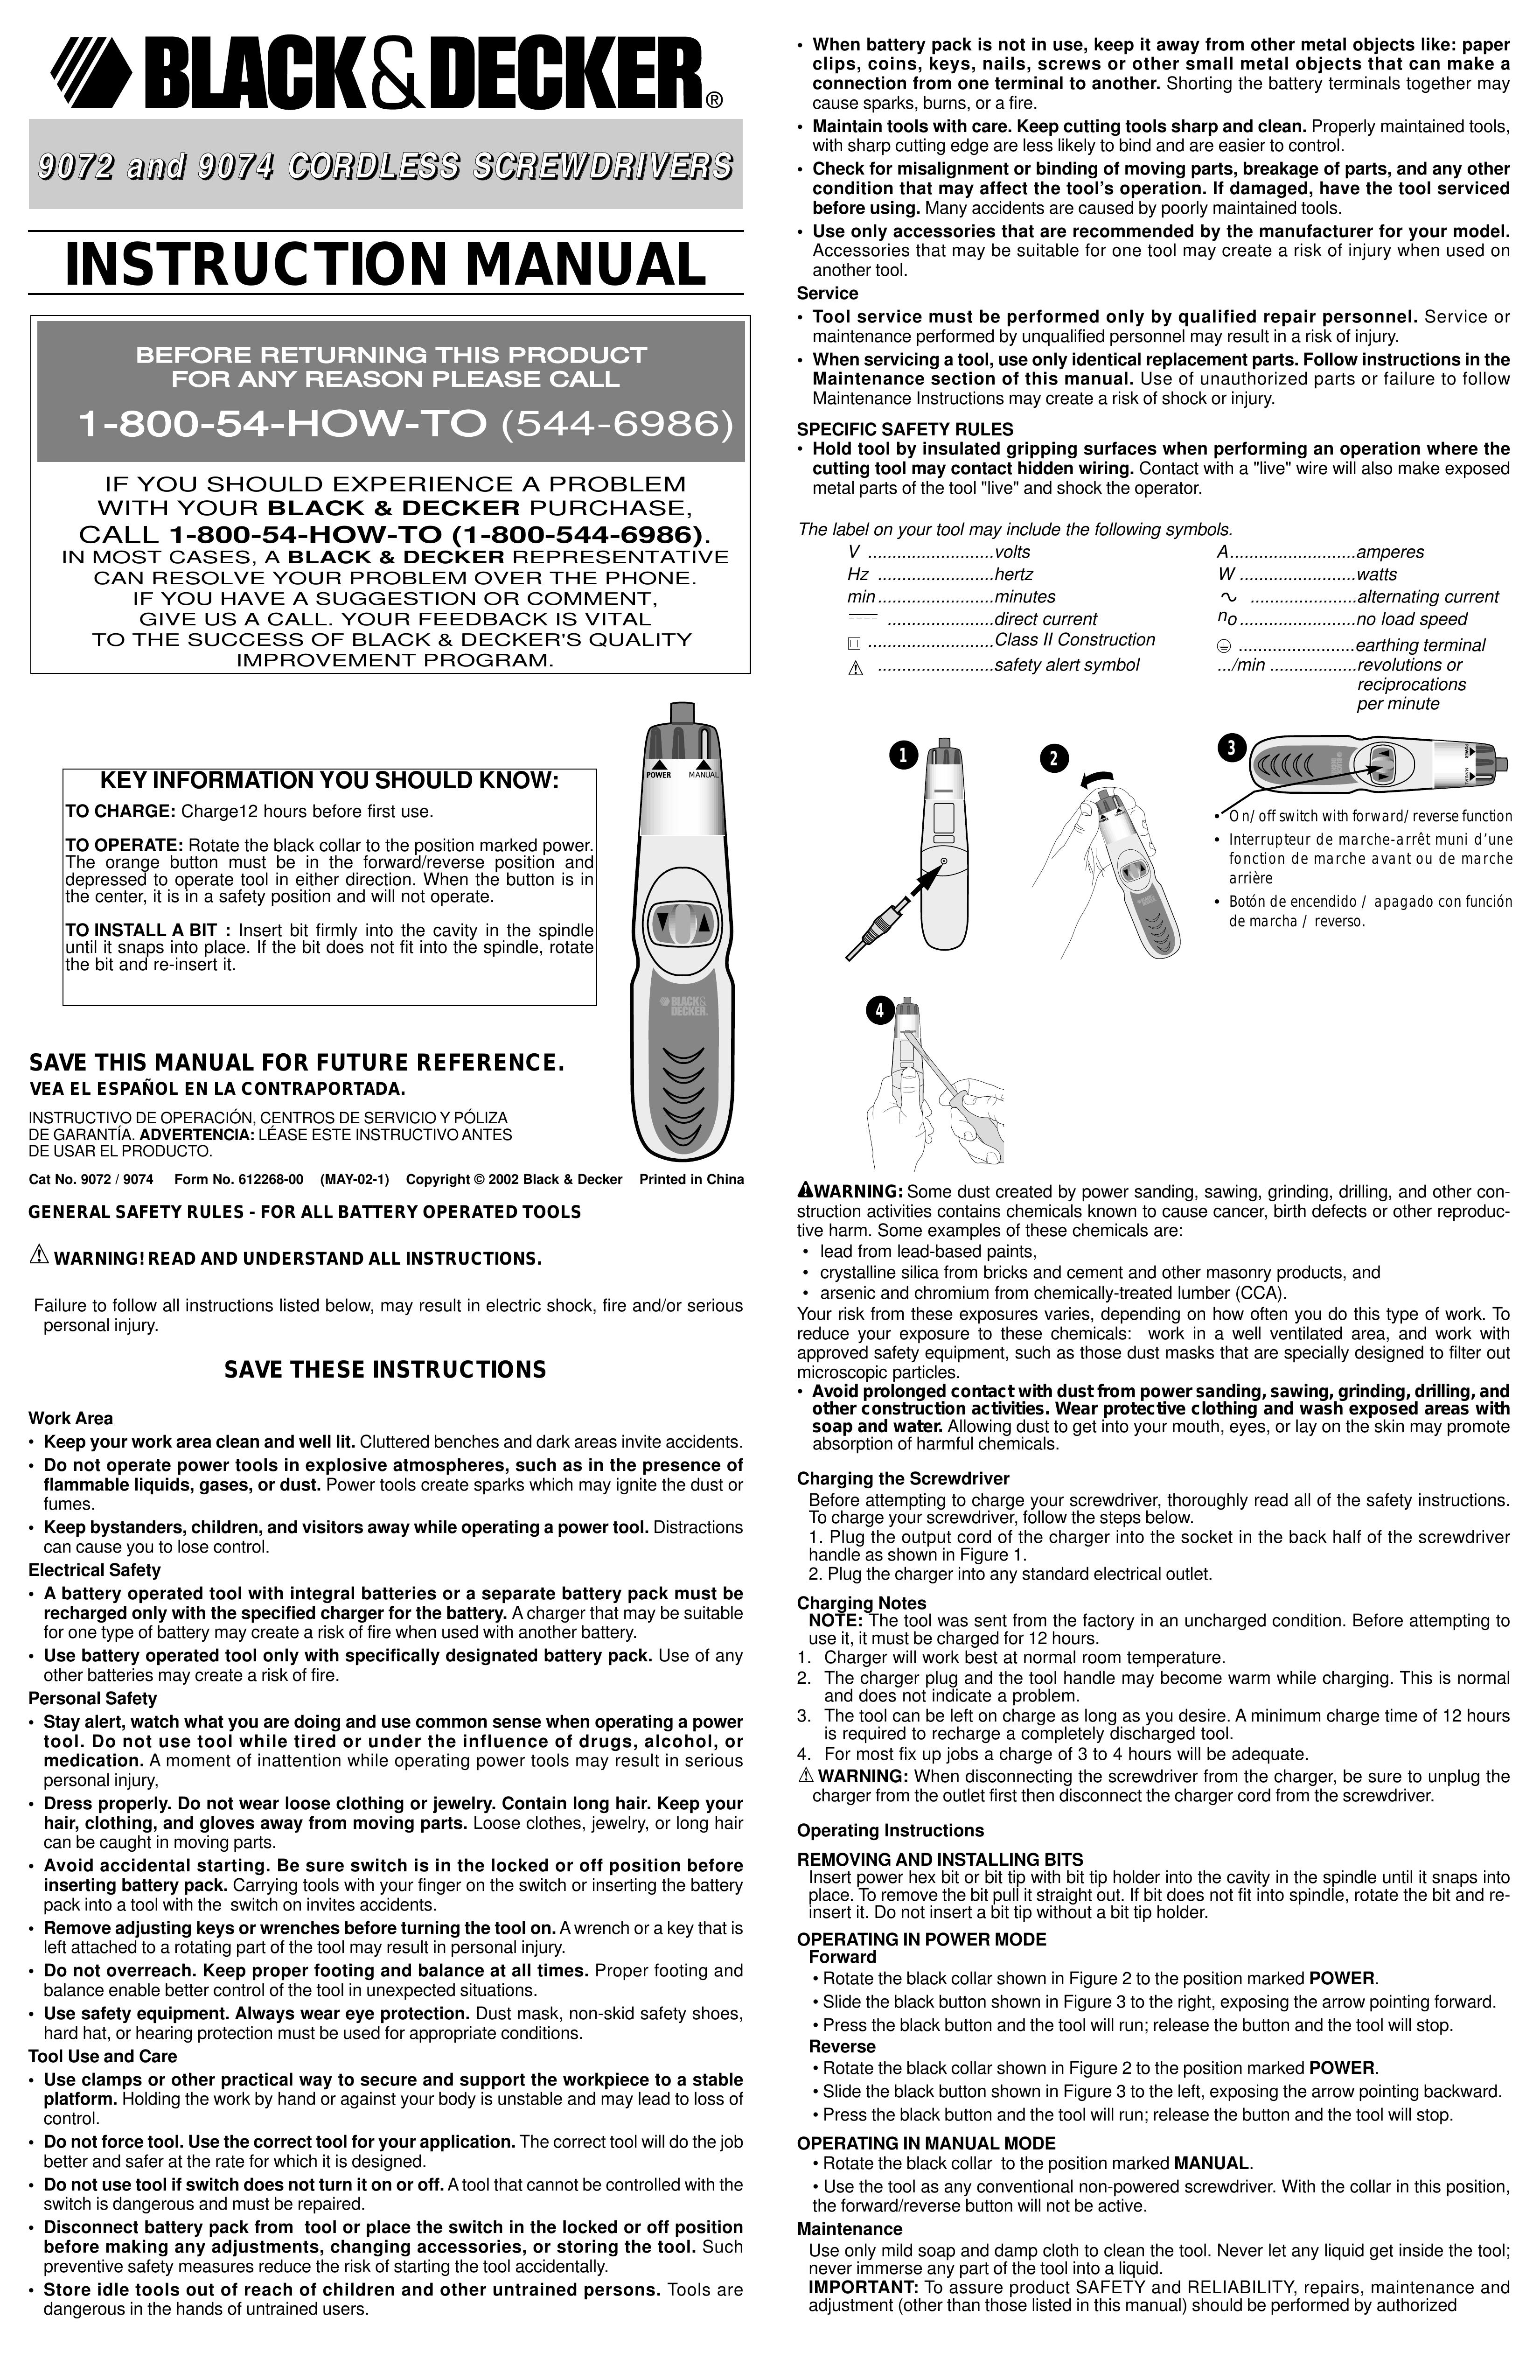 Black & Decker 9072 Marine Instruments User Manual